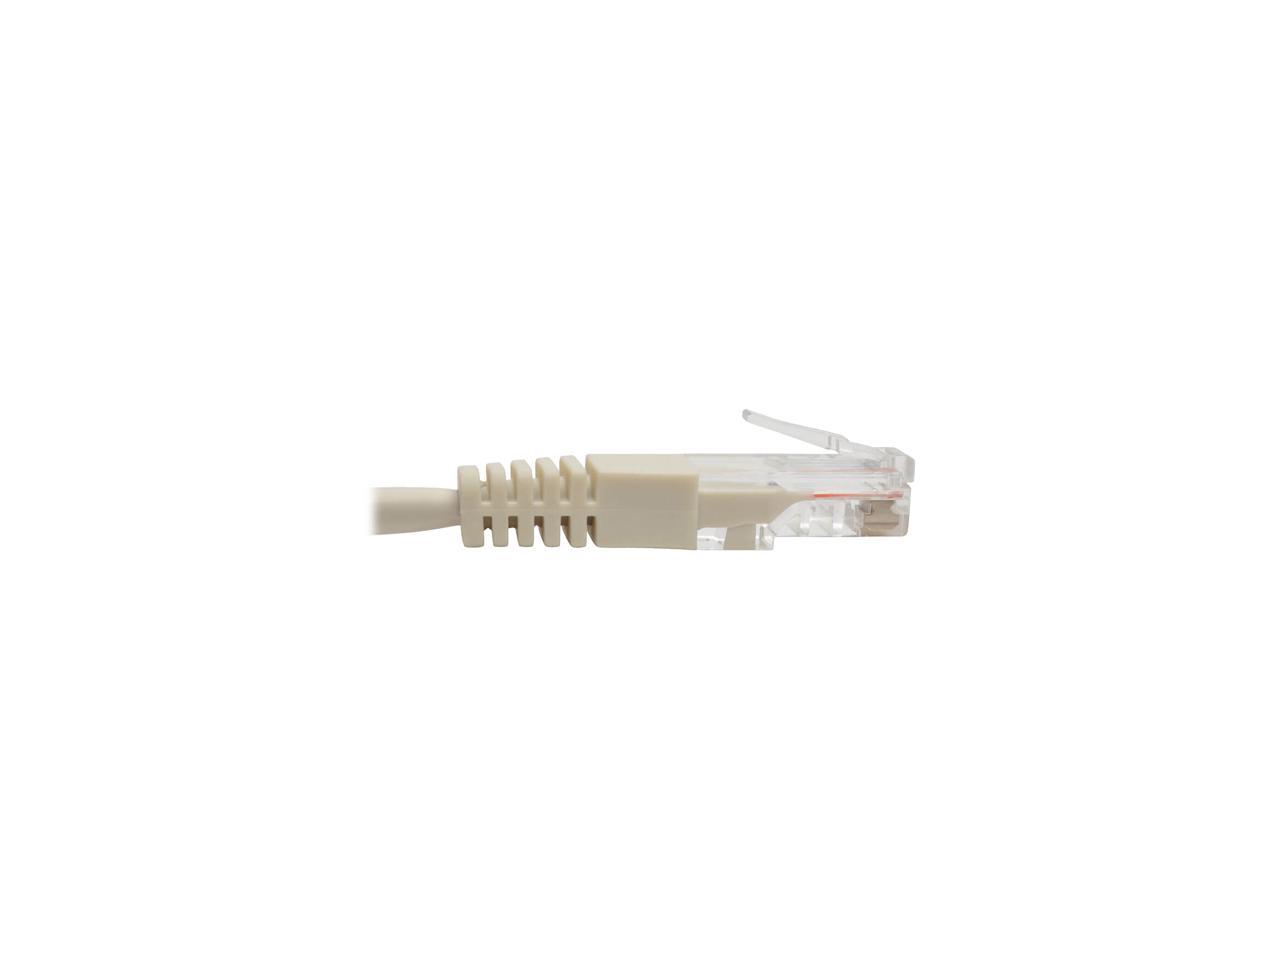 Tripp Lite Cat5e 350MHz Molded Patch Cable (RJ45 M/M) - White, 25-ft. (N002-025-WH)